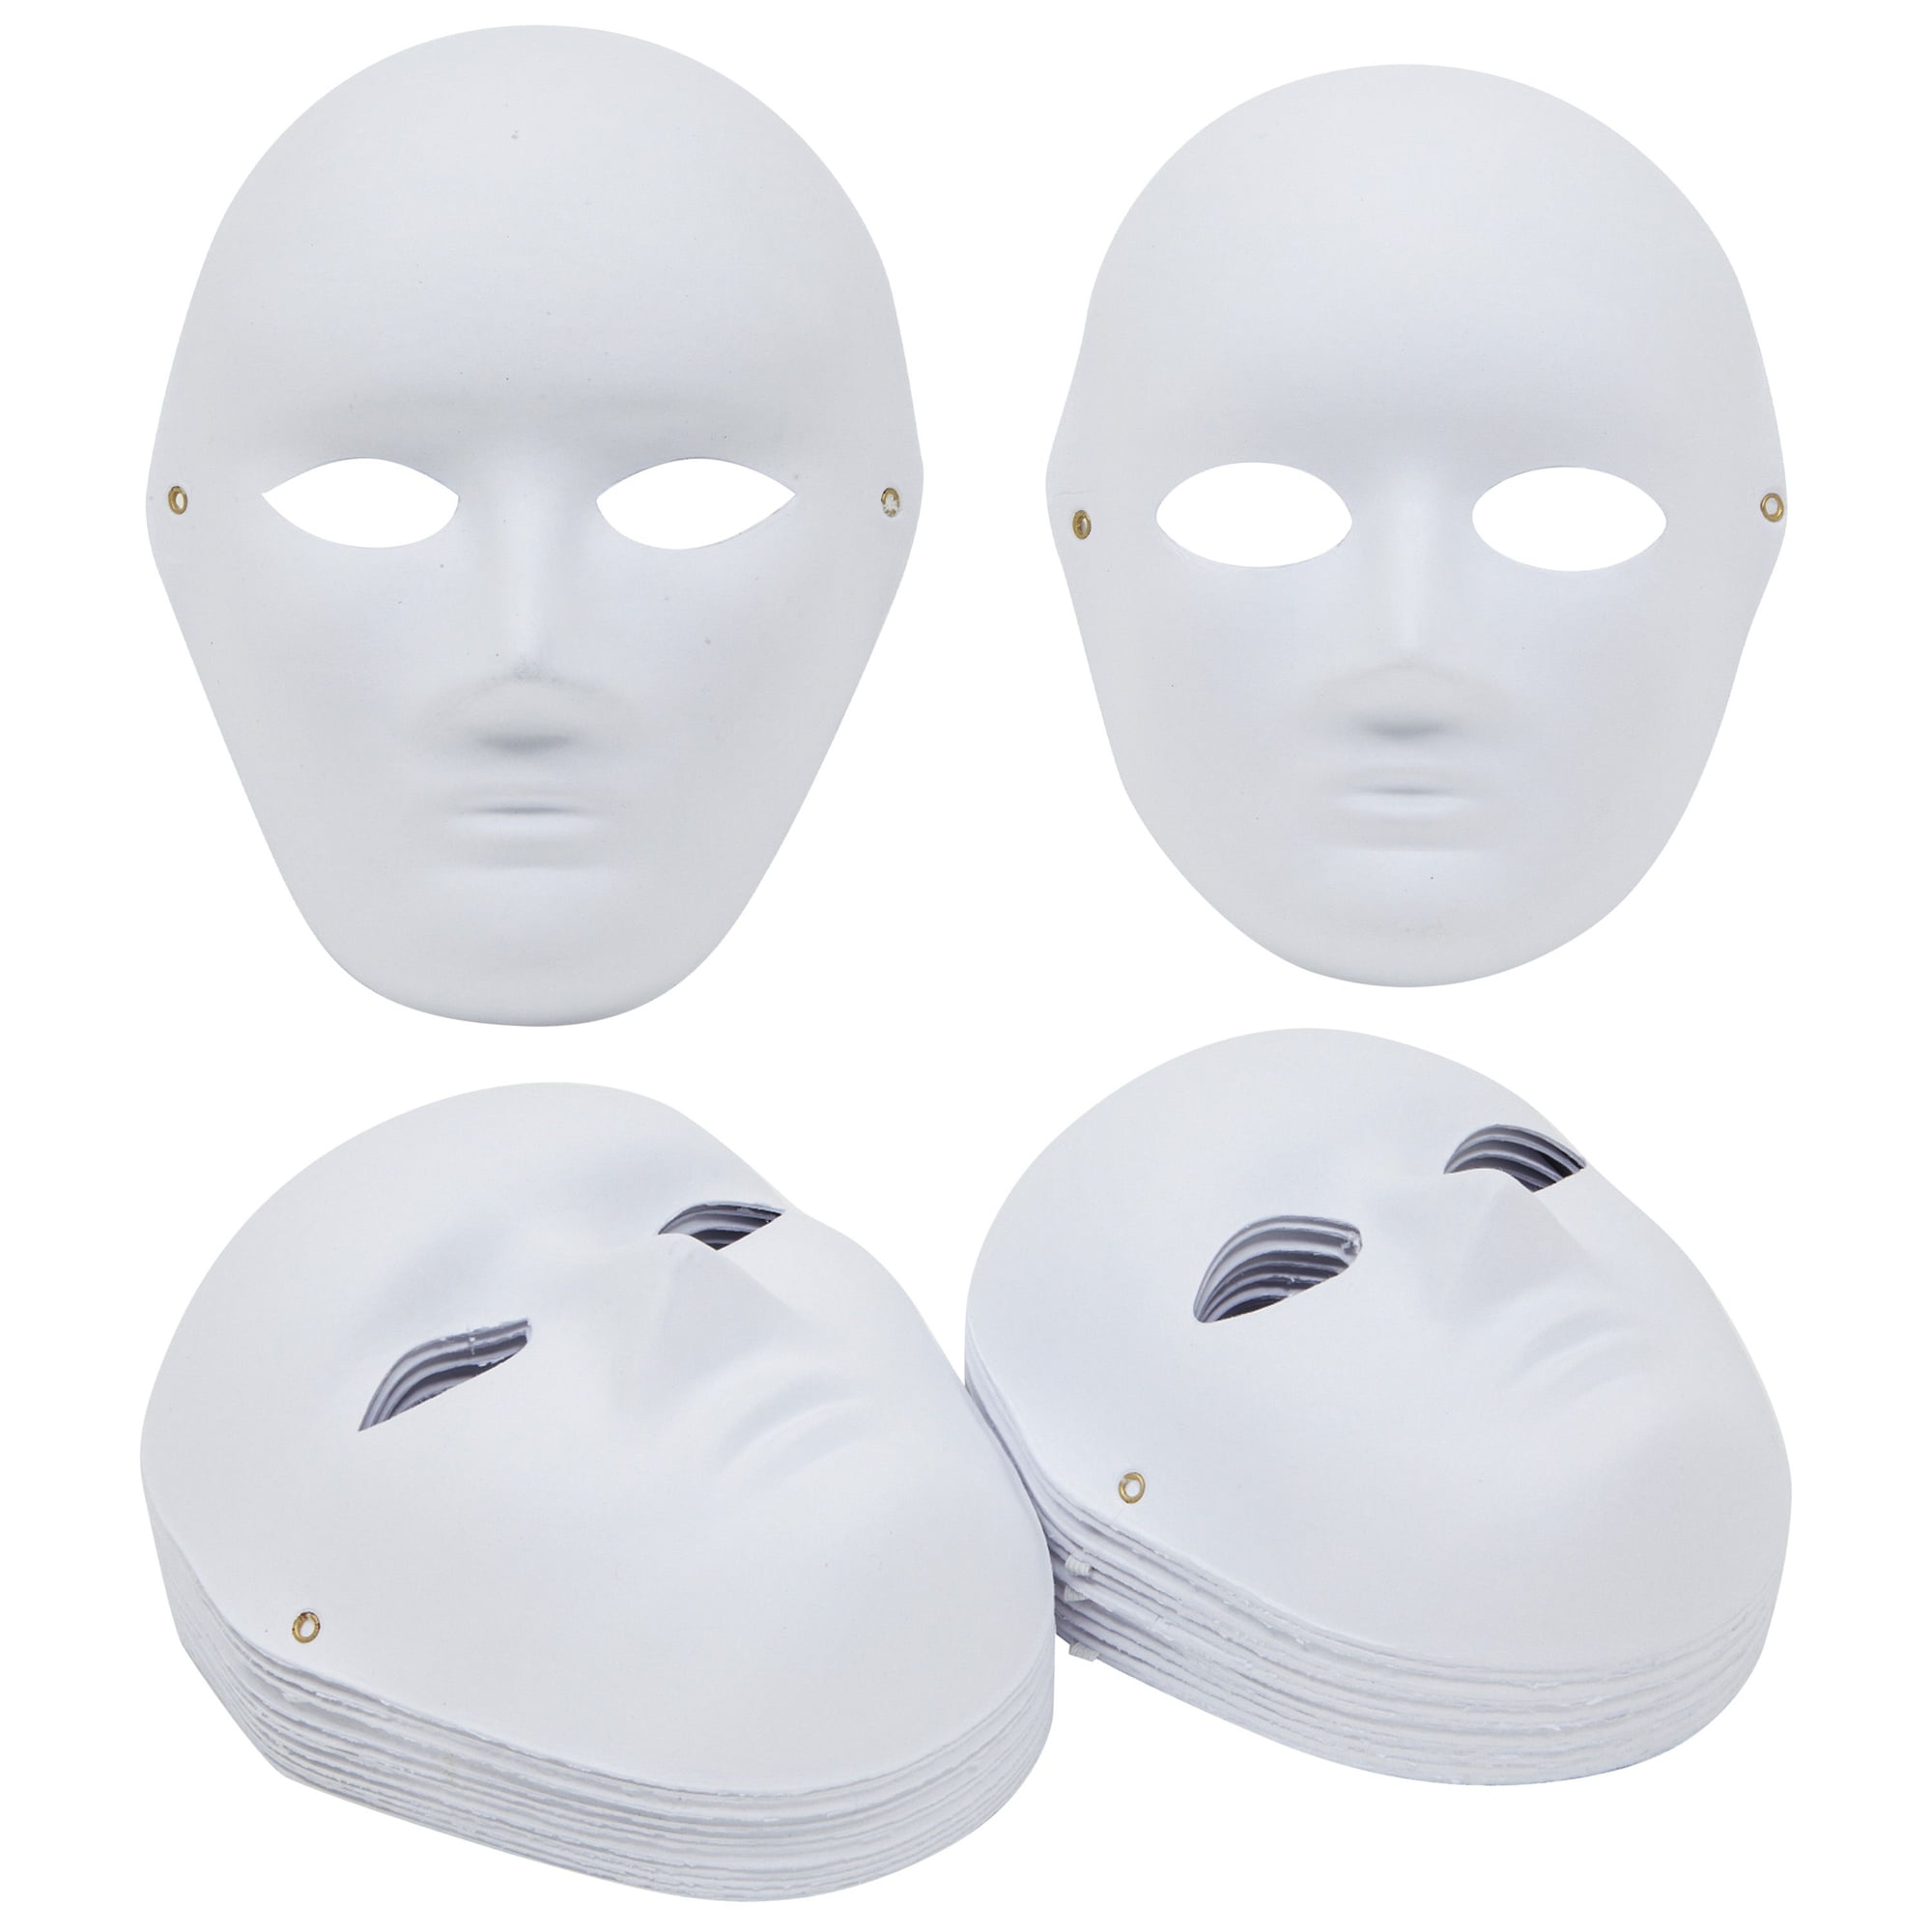  Halloween Paper Masks For Crafts White Blank Masks To  Decorate Halloween Party Supplies Die Cut Mardi Gras Masks Bulk